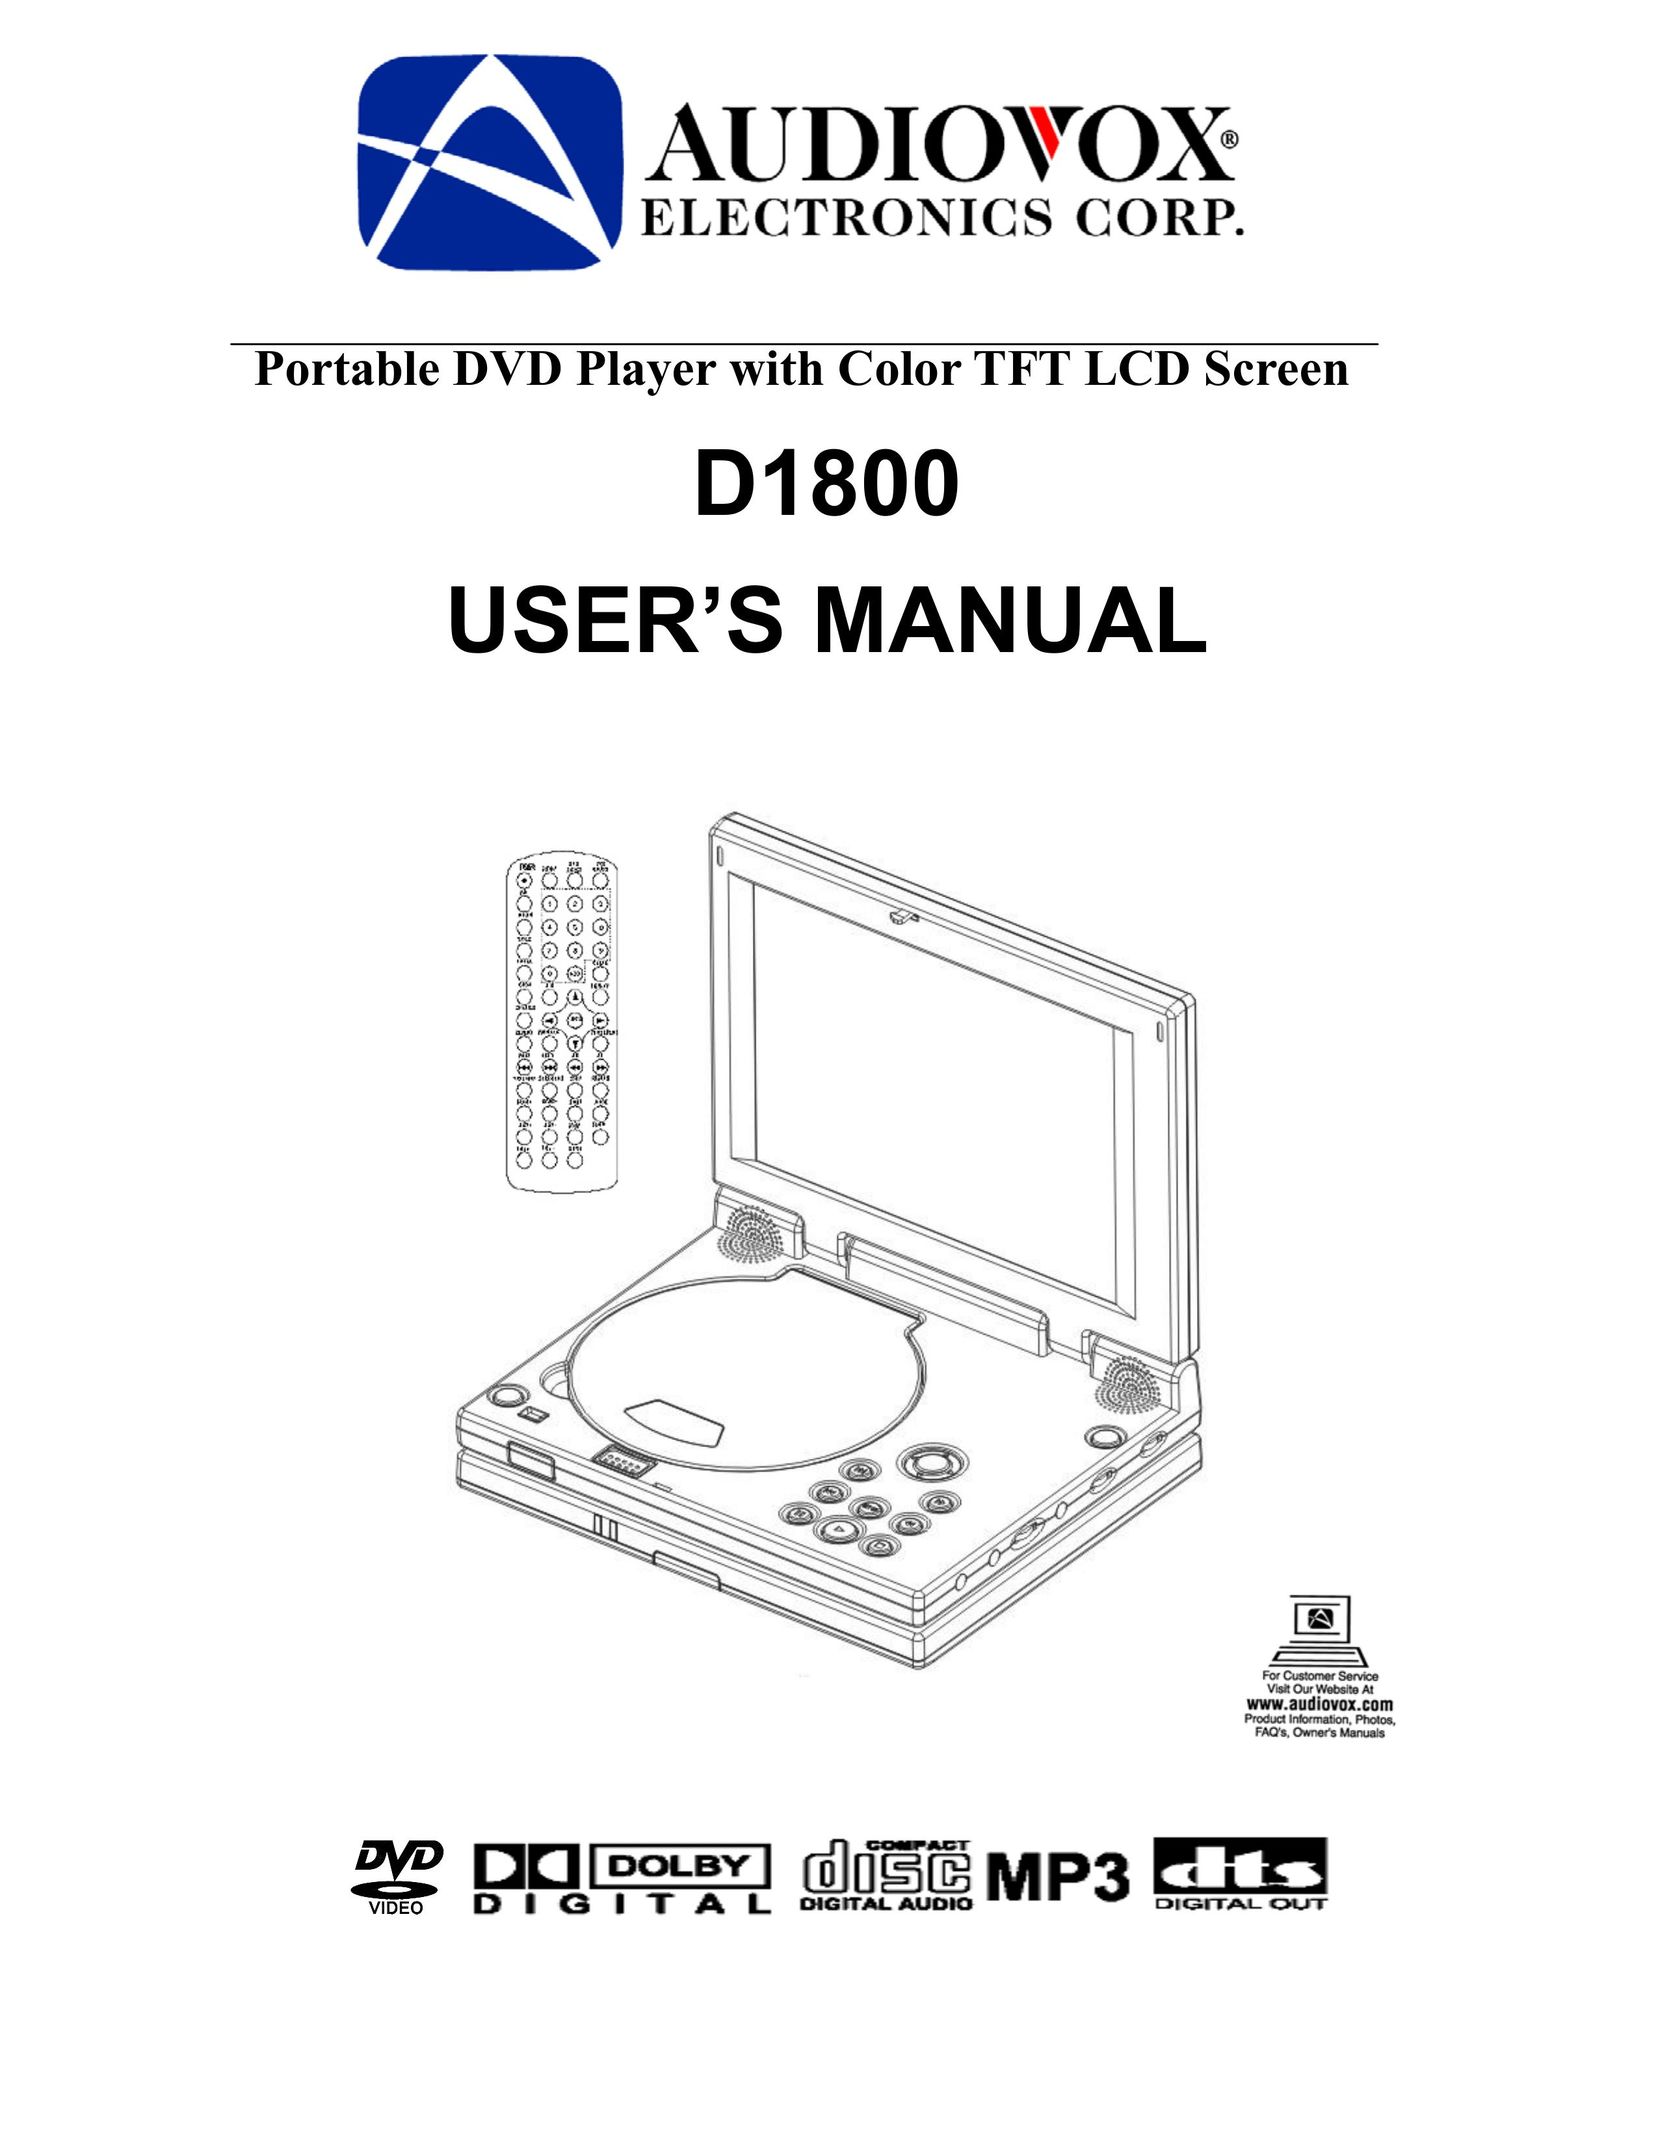 Audiovox D1800 DVD Player User Manual